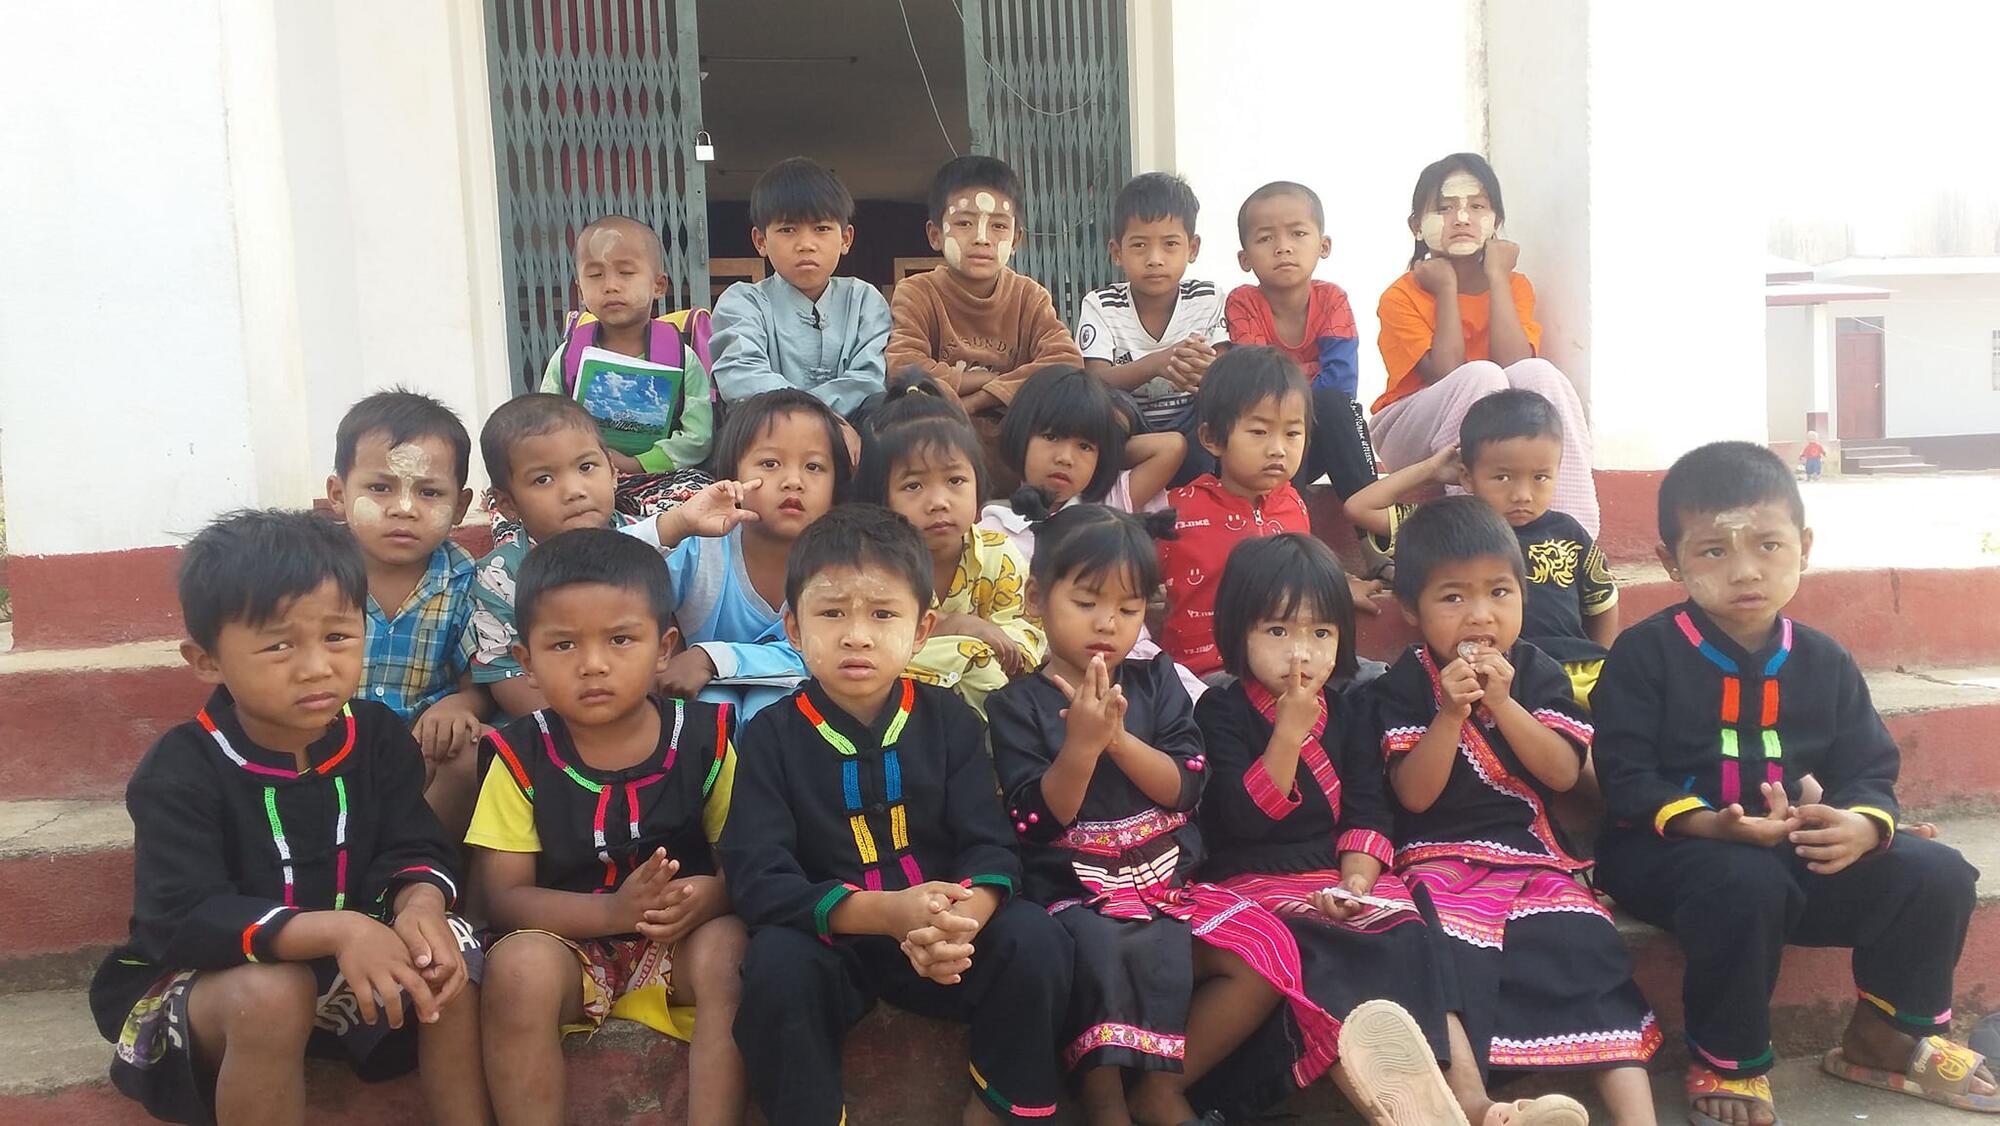 Hka nan, Muk cumˊ sunday school children